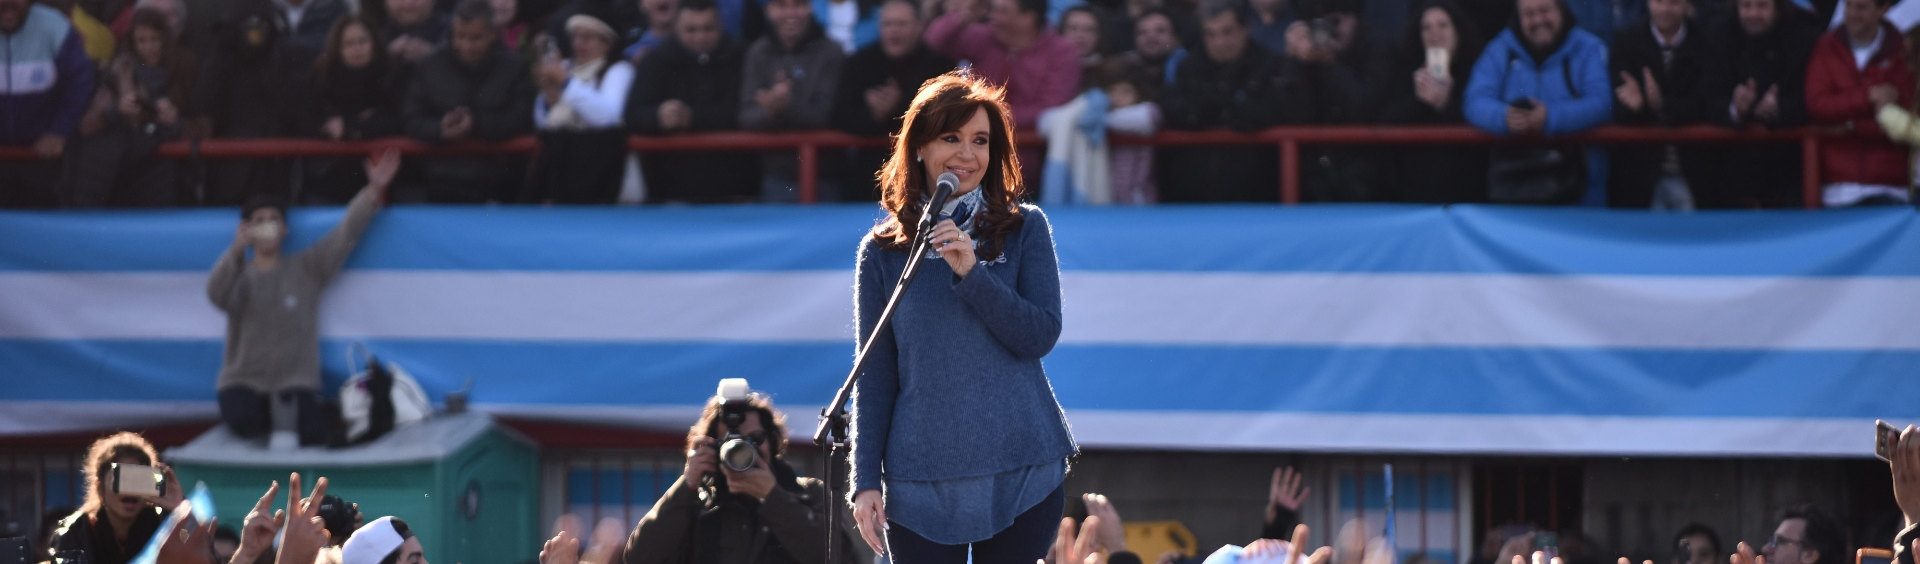 Por que Bolsonaro teme mulheres como a ex-presidenta Cristina Kirchner?